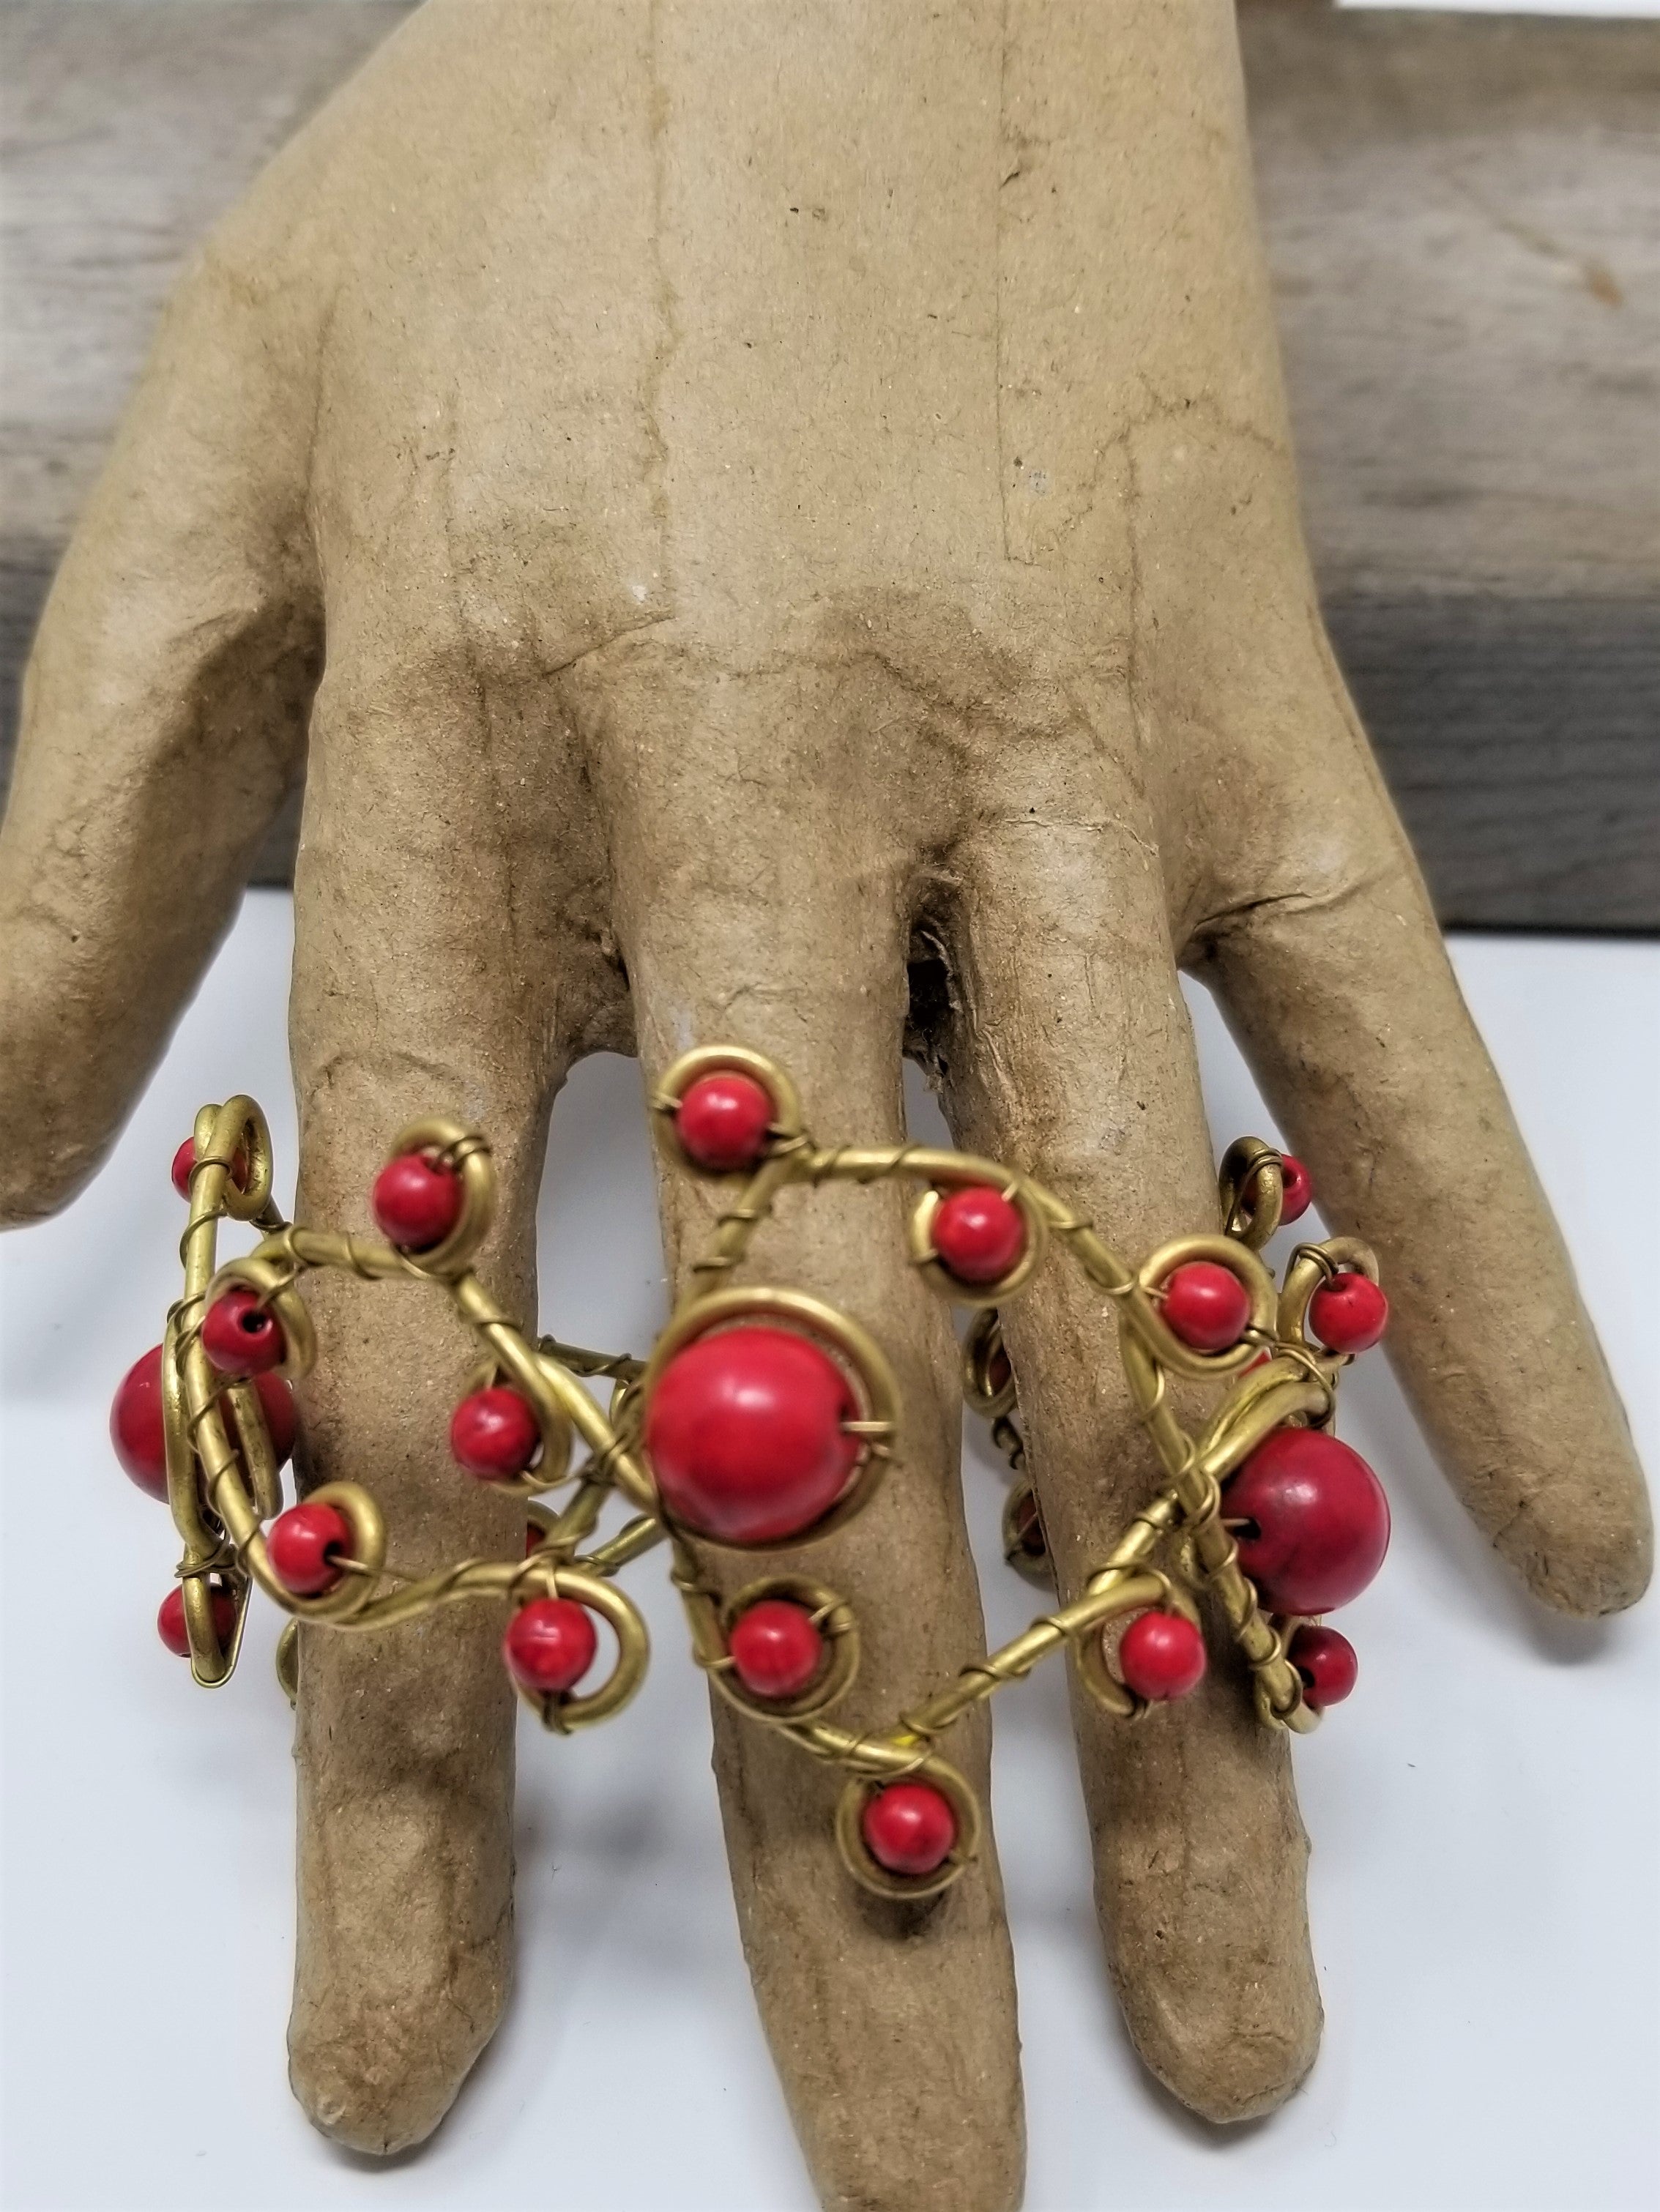 Interesting Handmade Beaded Bracelet Vintage Gold wire Red Beads